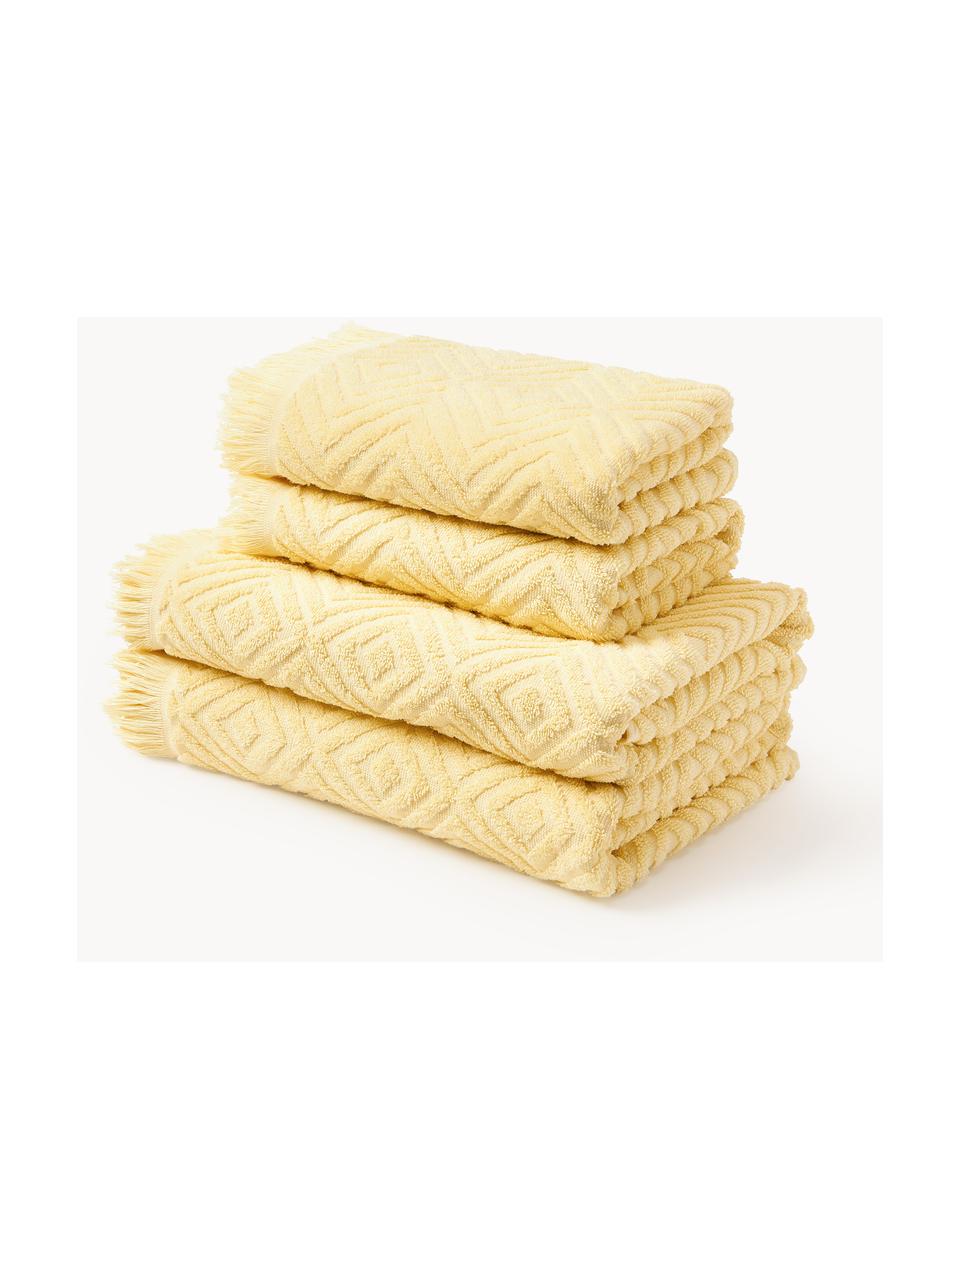 Set de toallas texturizadas Jacqui, tamaños diferentes, Amarillo claro, Set de 3 (toalla tocador, toalla lavabo y toalla de ducha)